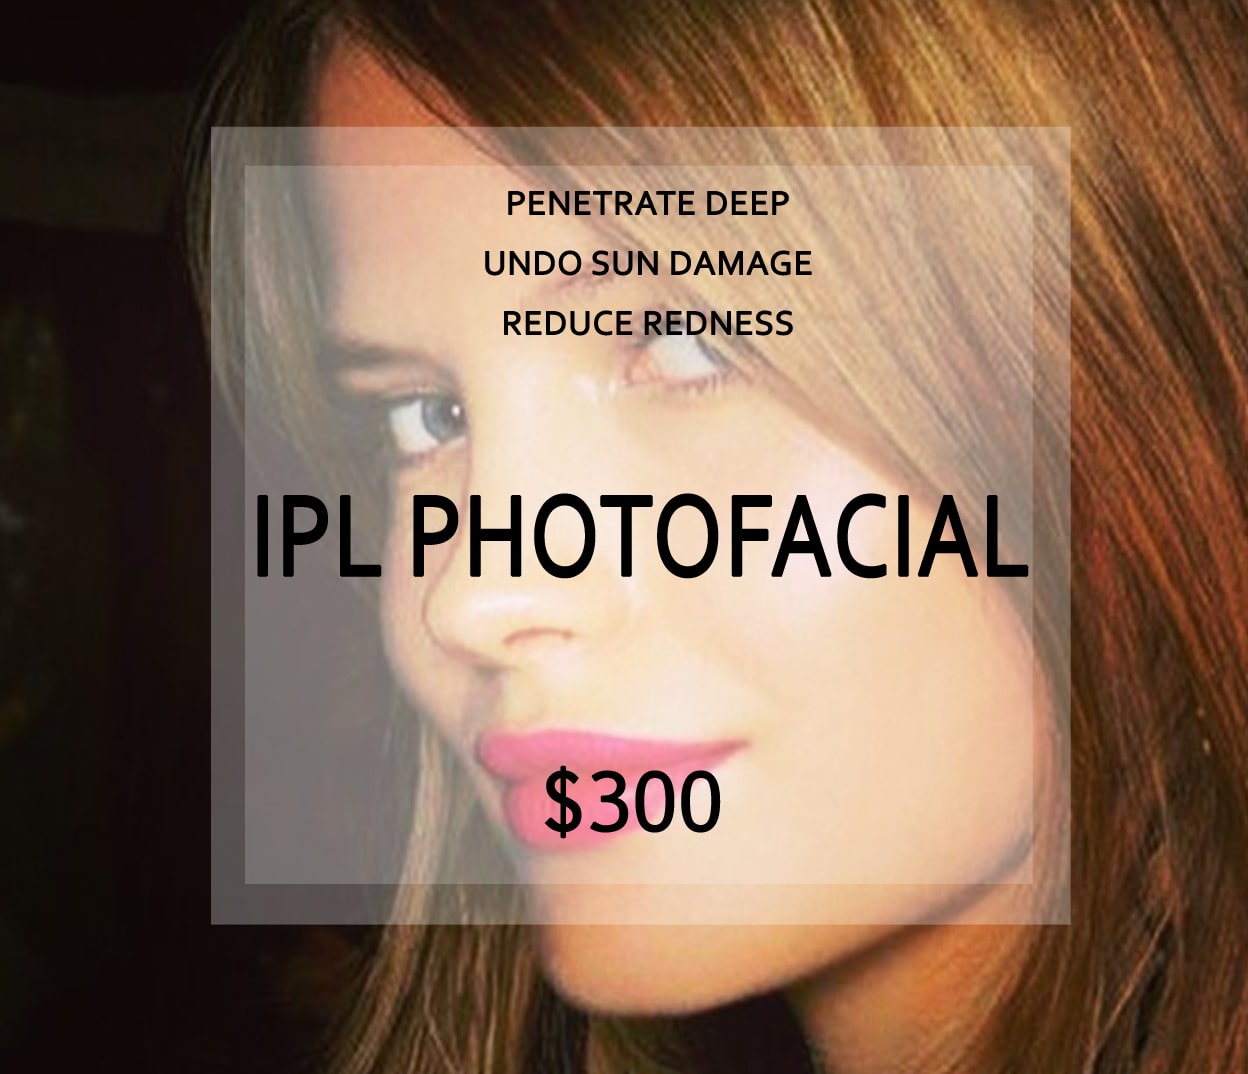 ipl-photofacial-ut-beauty-lab-and-laser